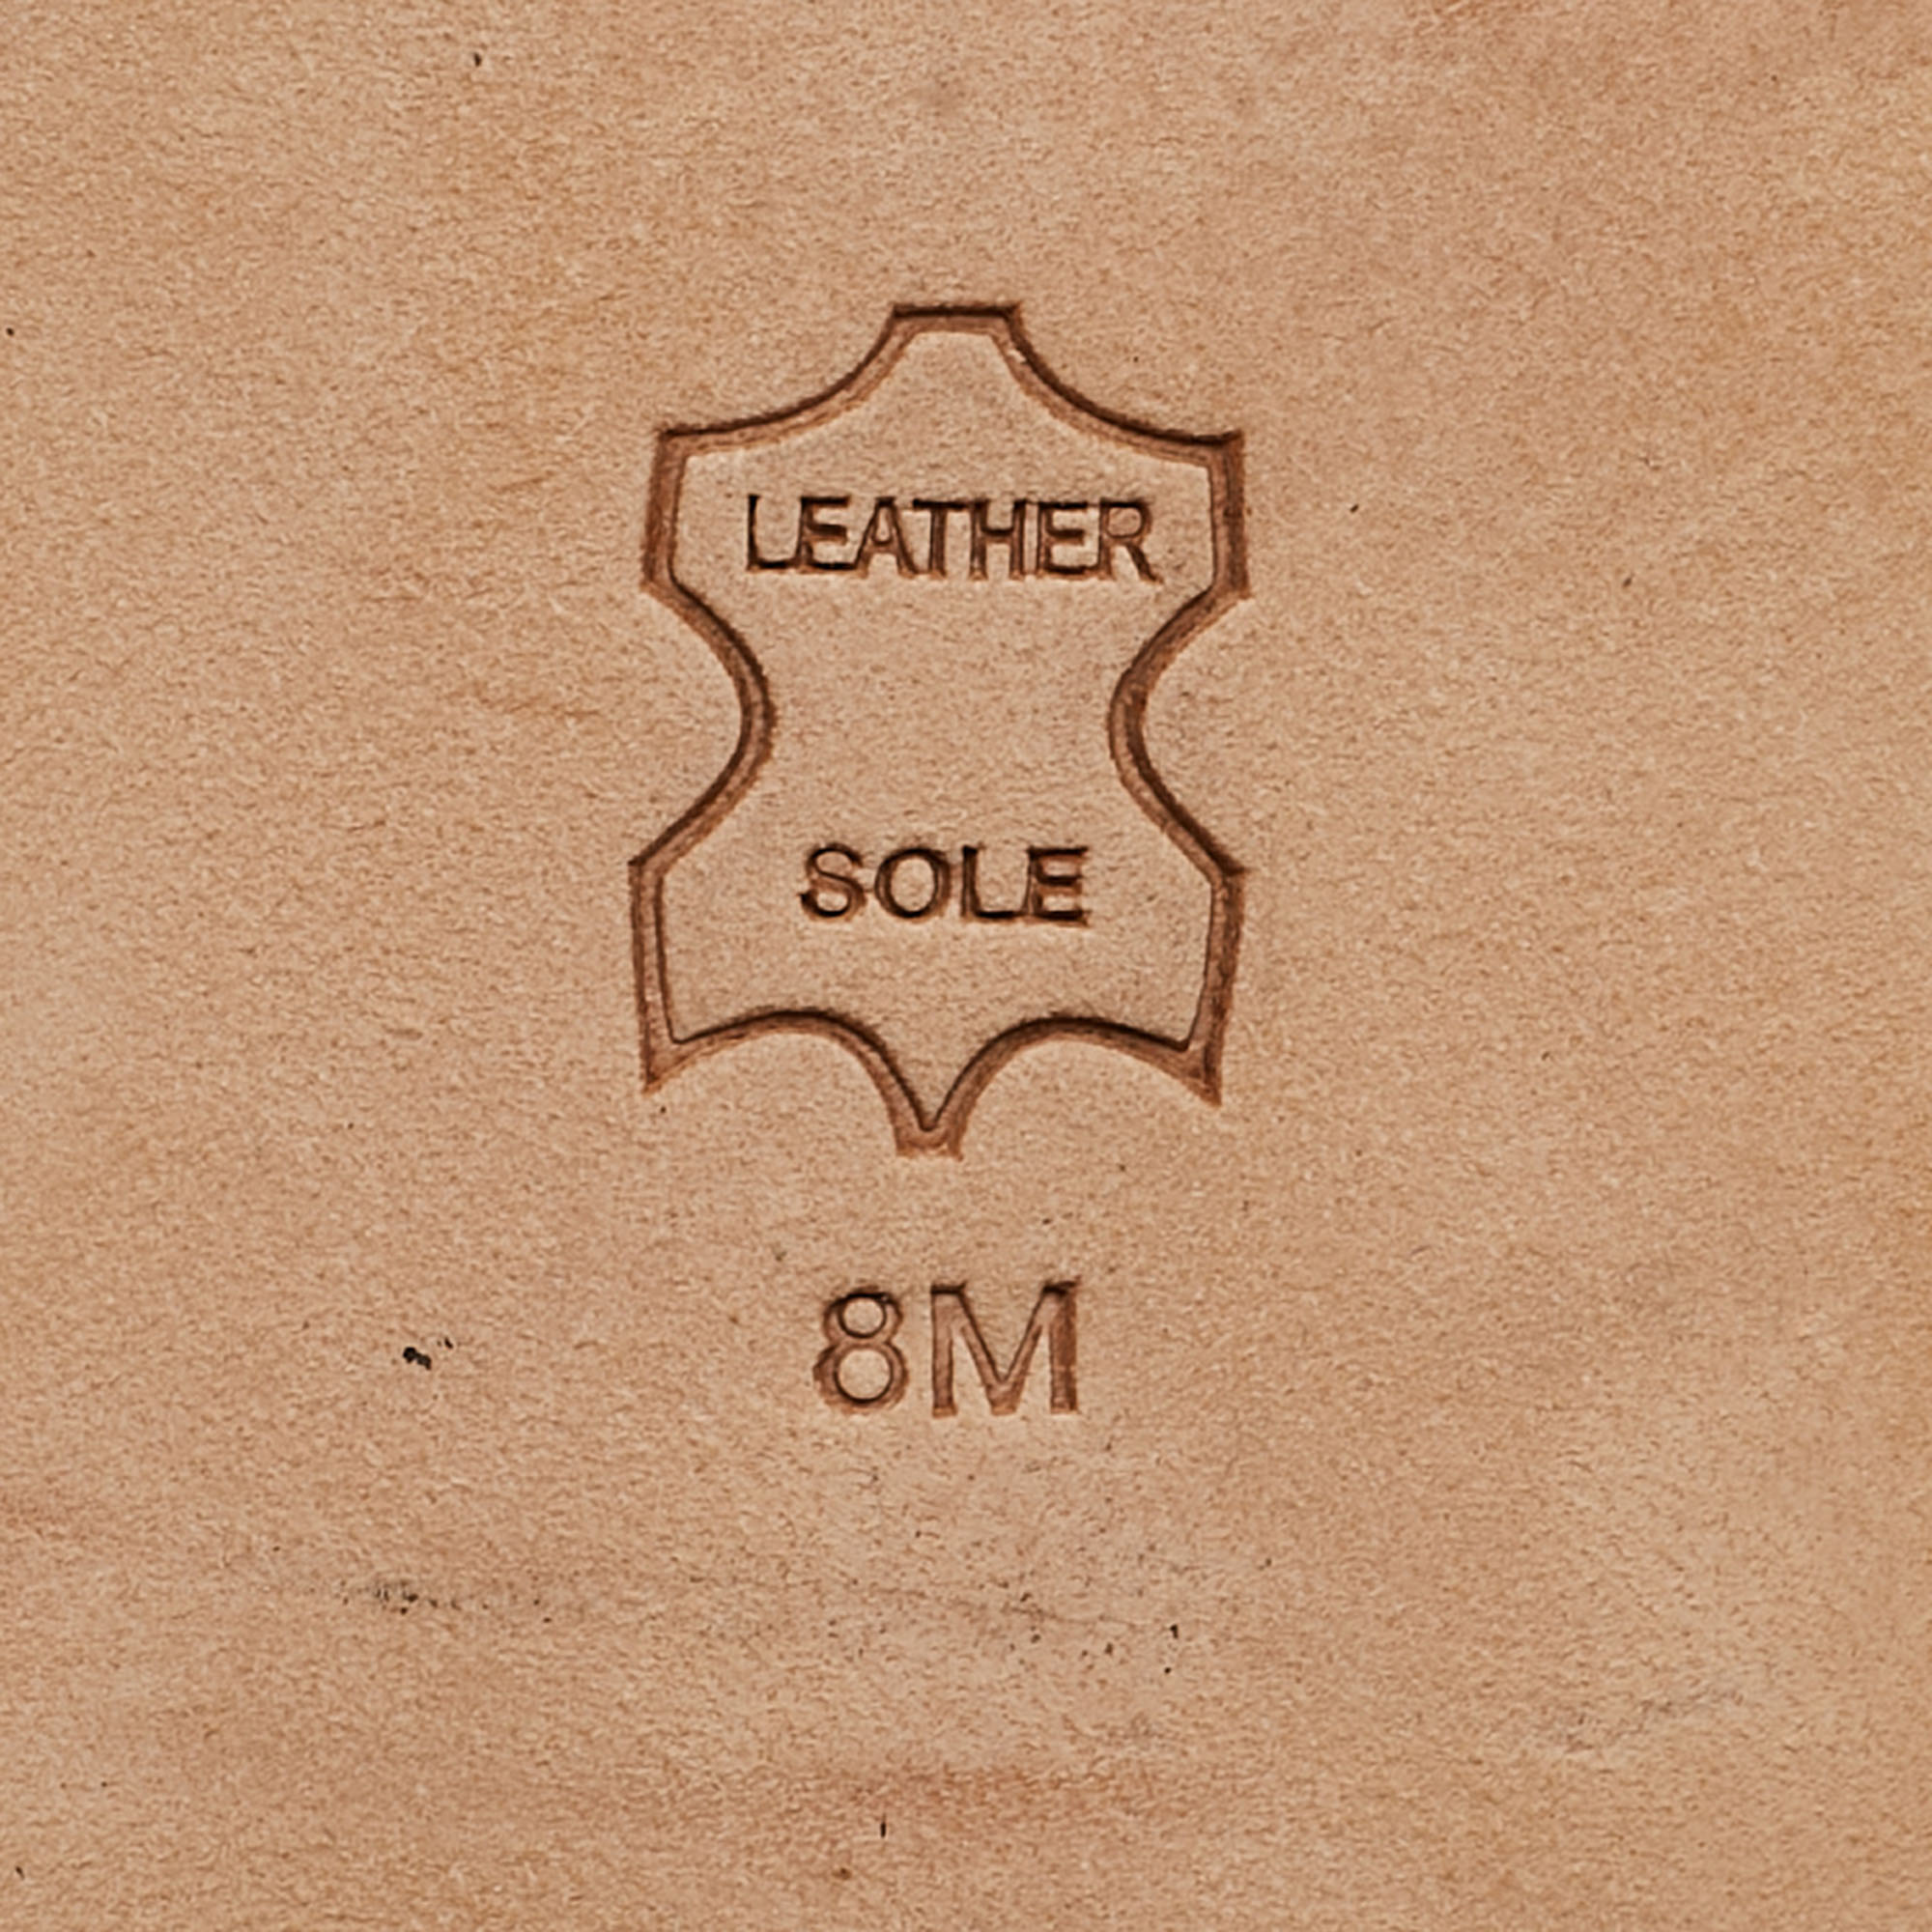 Tory Burch Green Leather Benton Ballet Flats Size 38.5